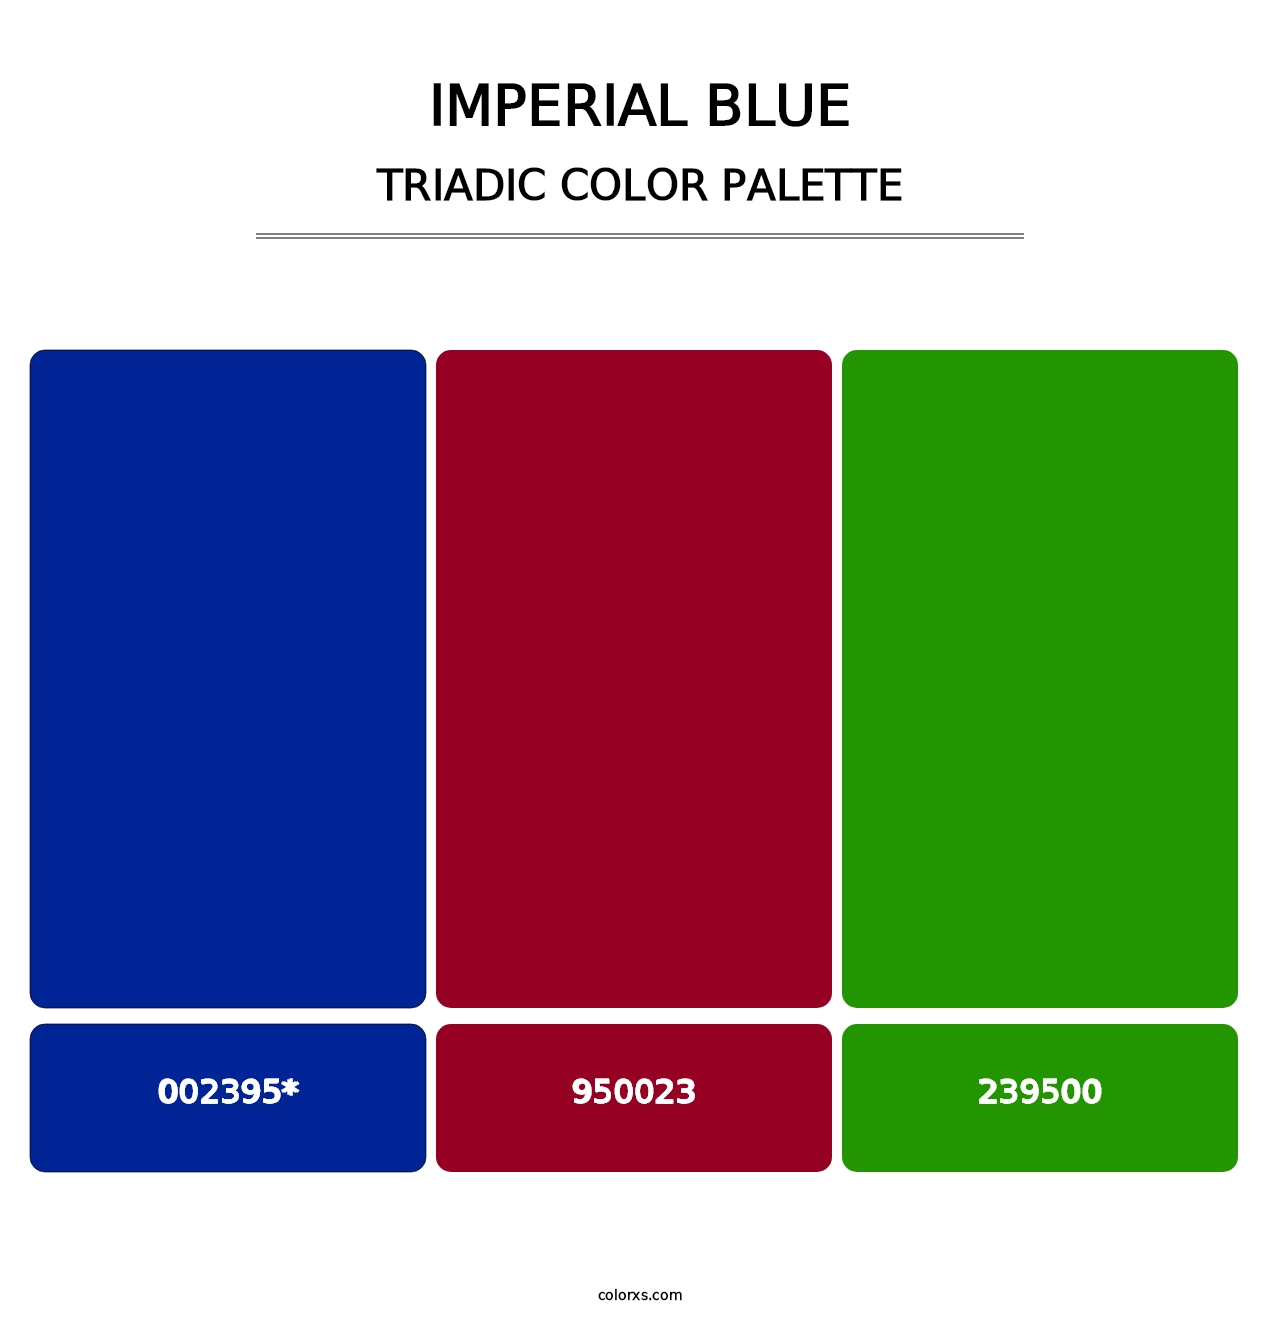 Imperial Blue - Triadic Color Palette